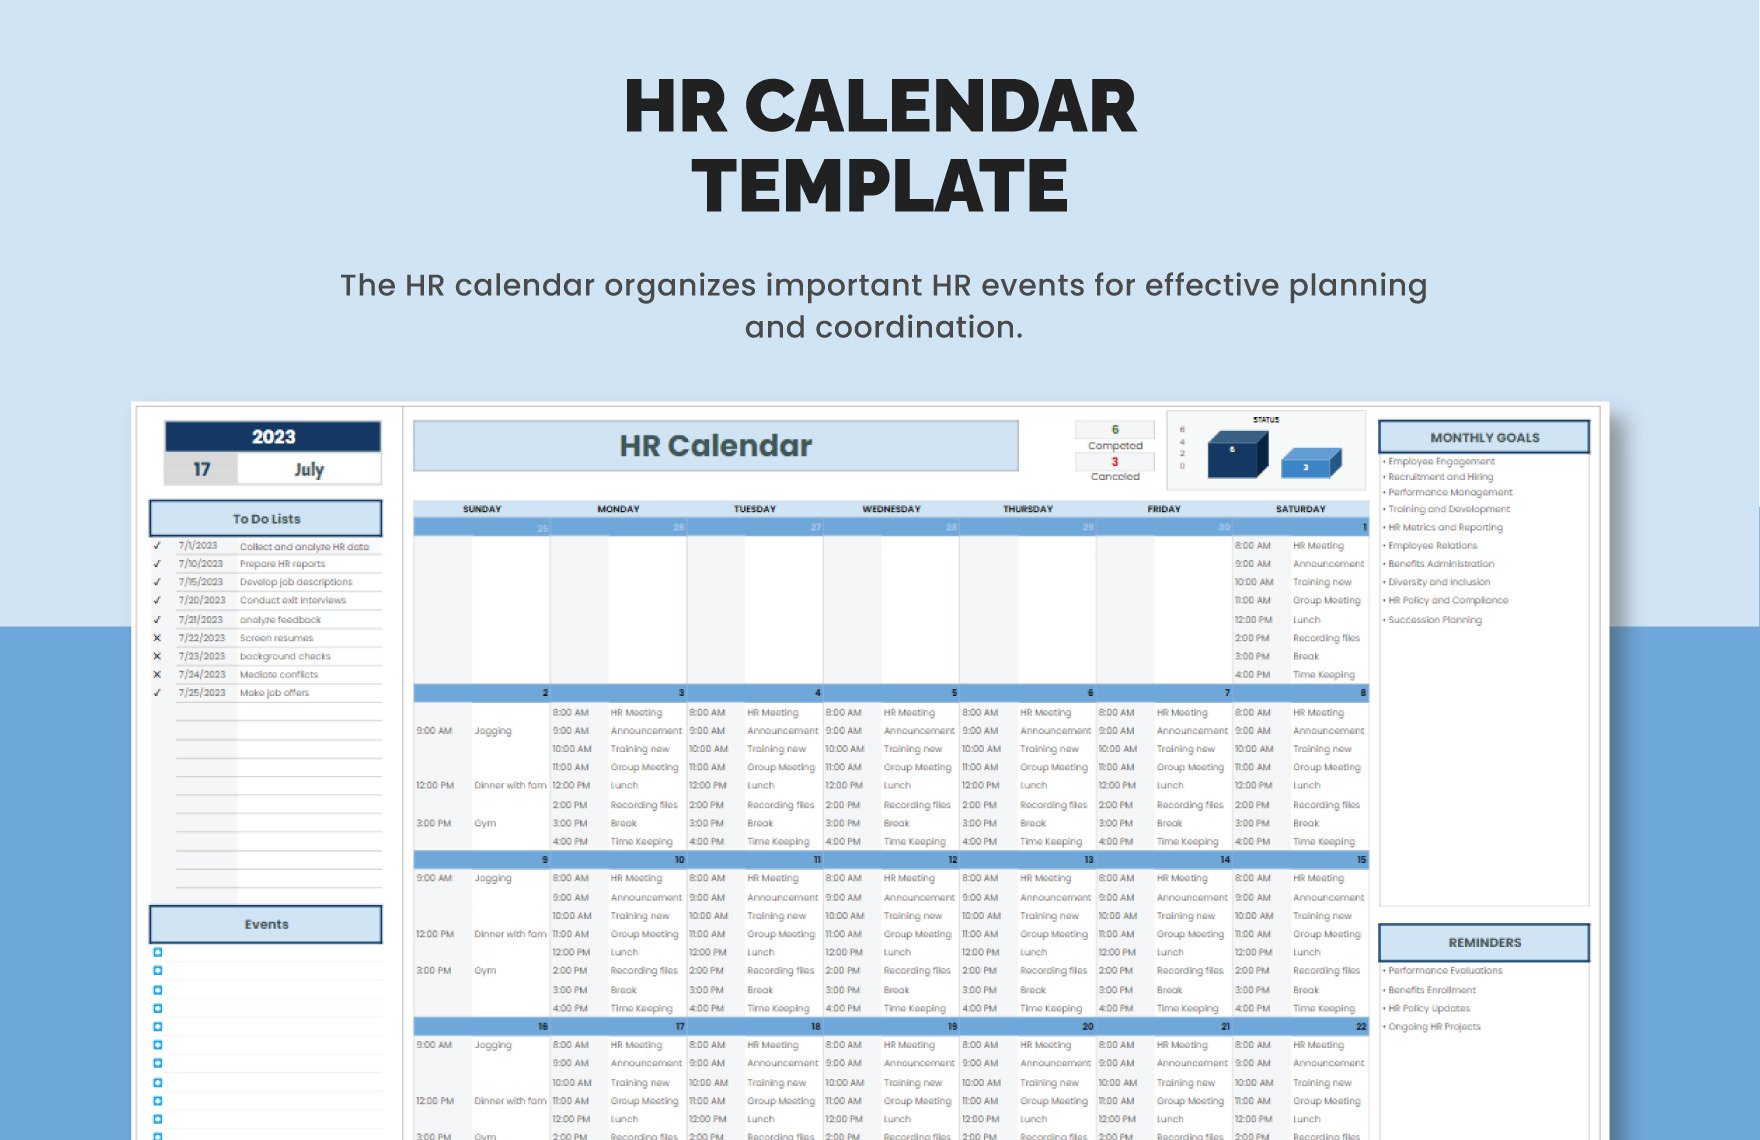 HR Calendar Template Download in Excel, Google Sheets